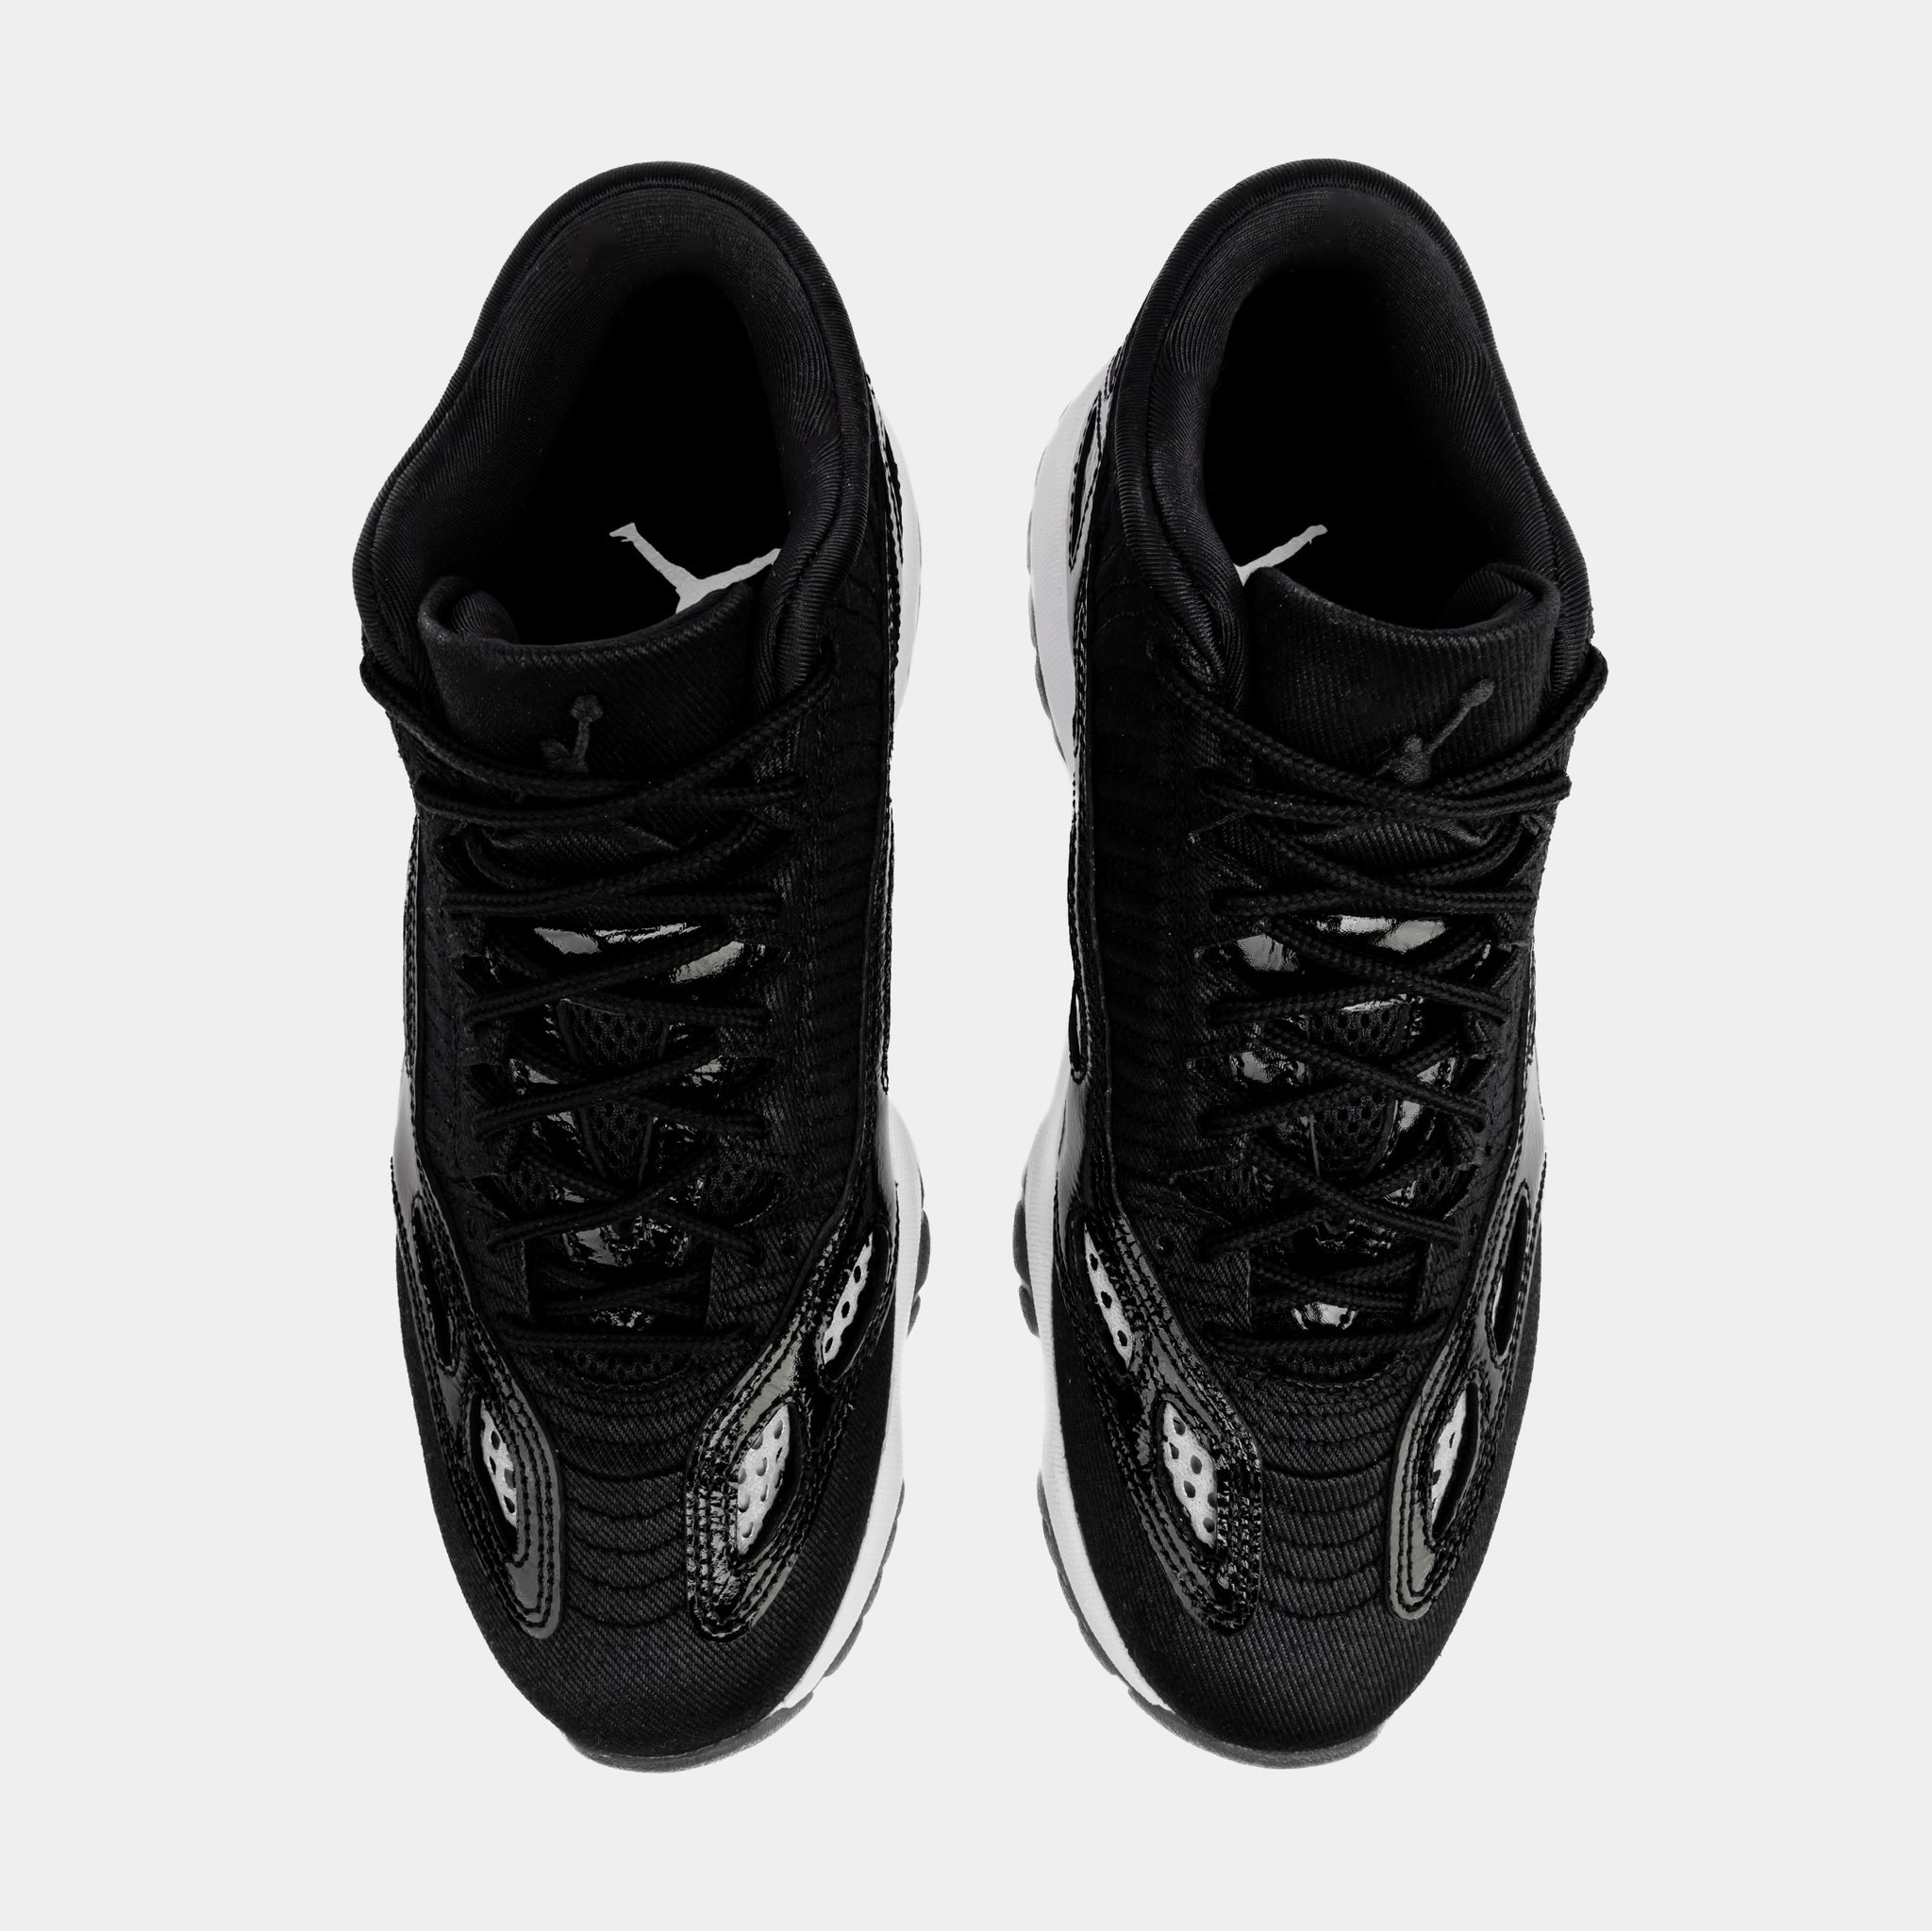 Air Jordan 11 Retro Low IE Craft Mens Lifestyle Shoes (Black/White)